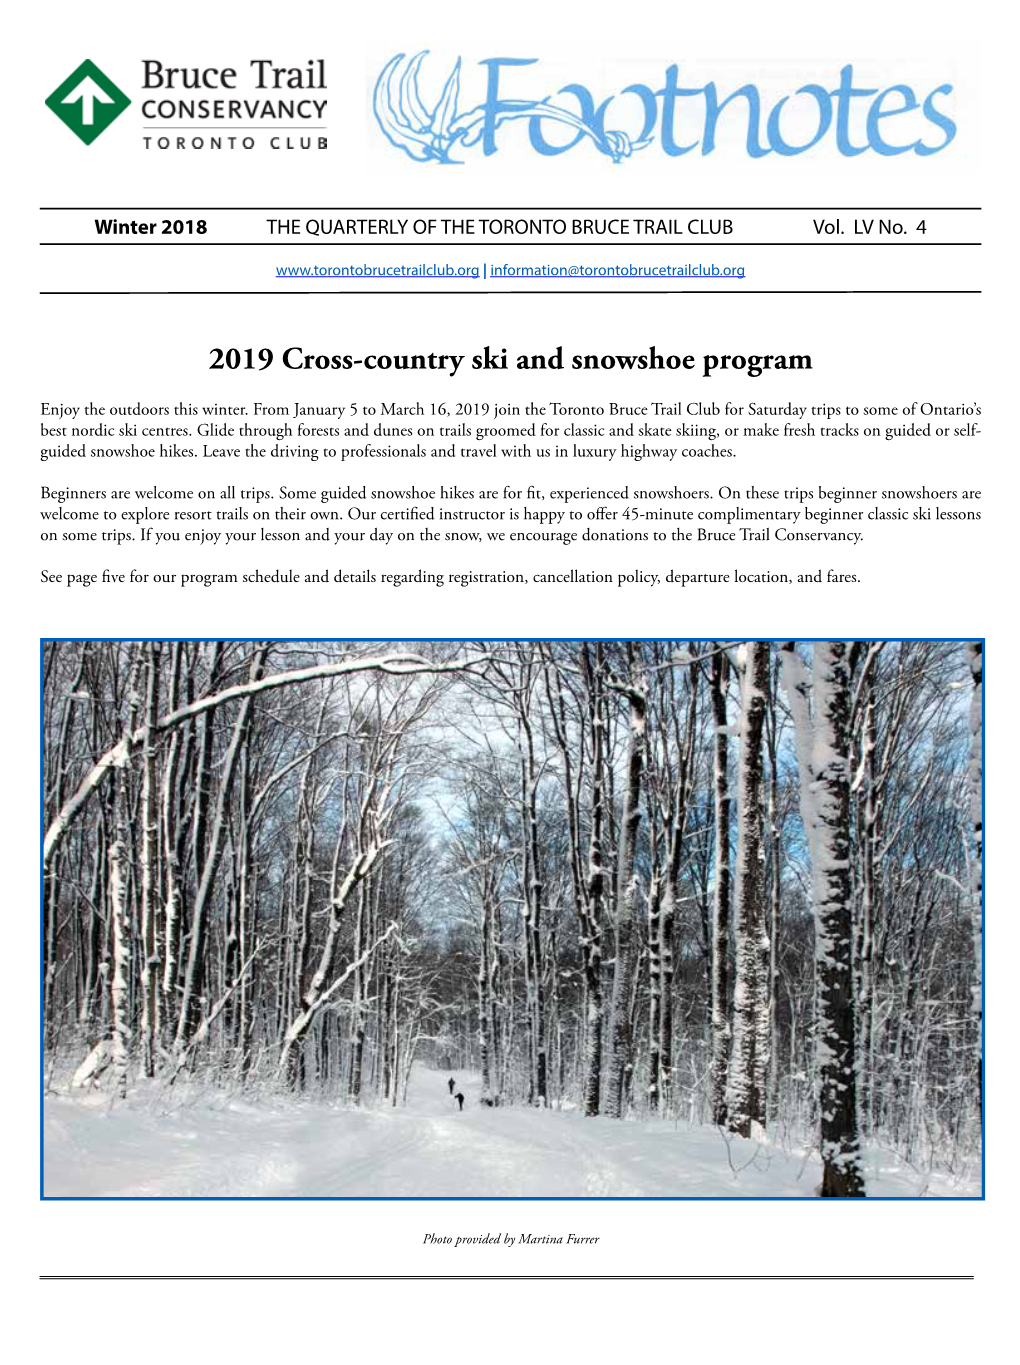 2019 Cross-Country Ski and Snowshoe Program